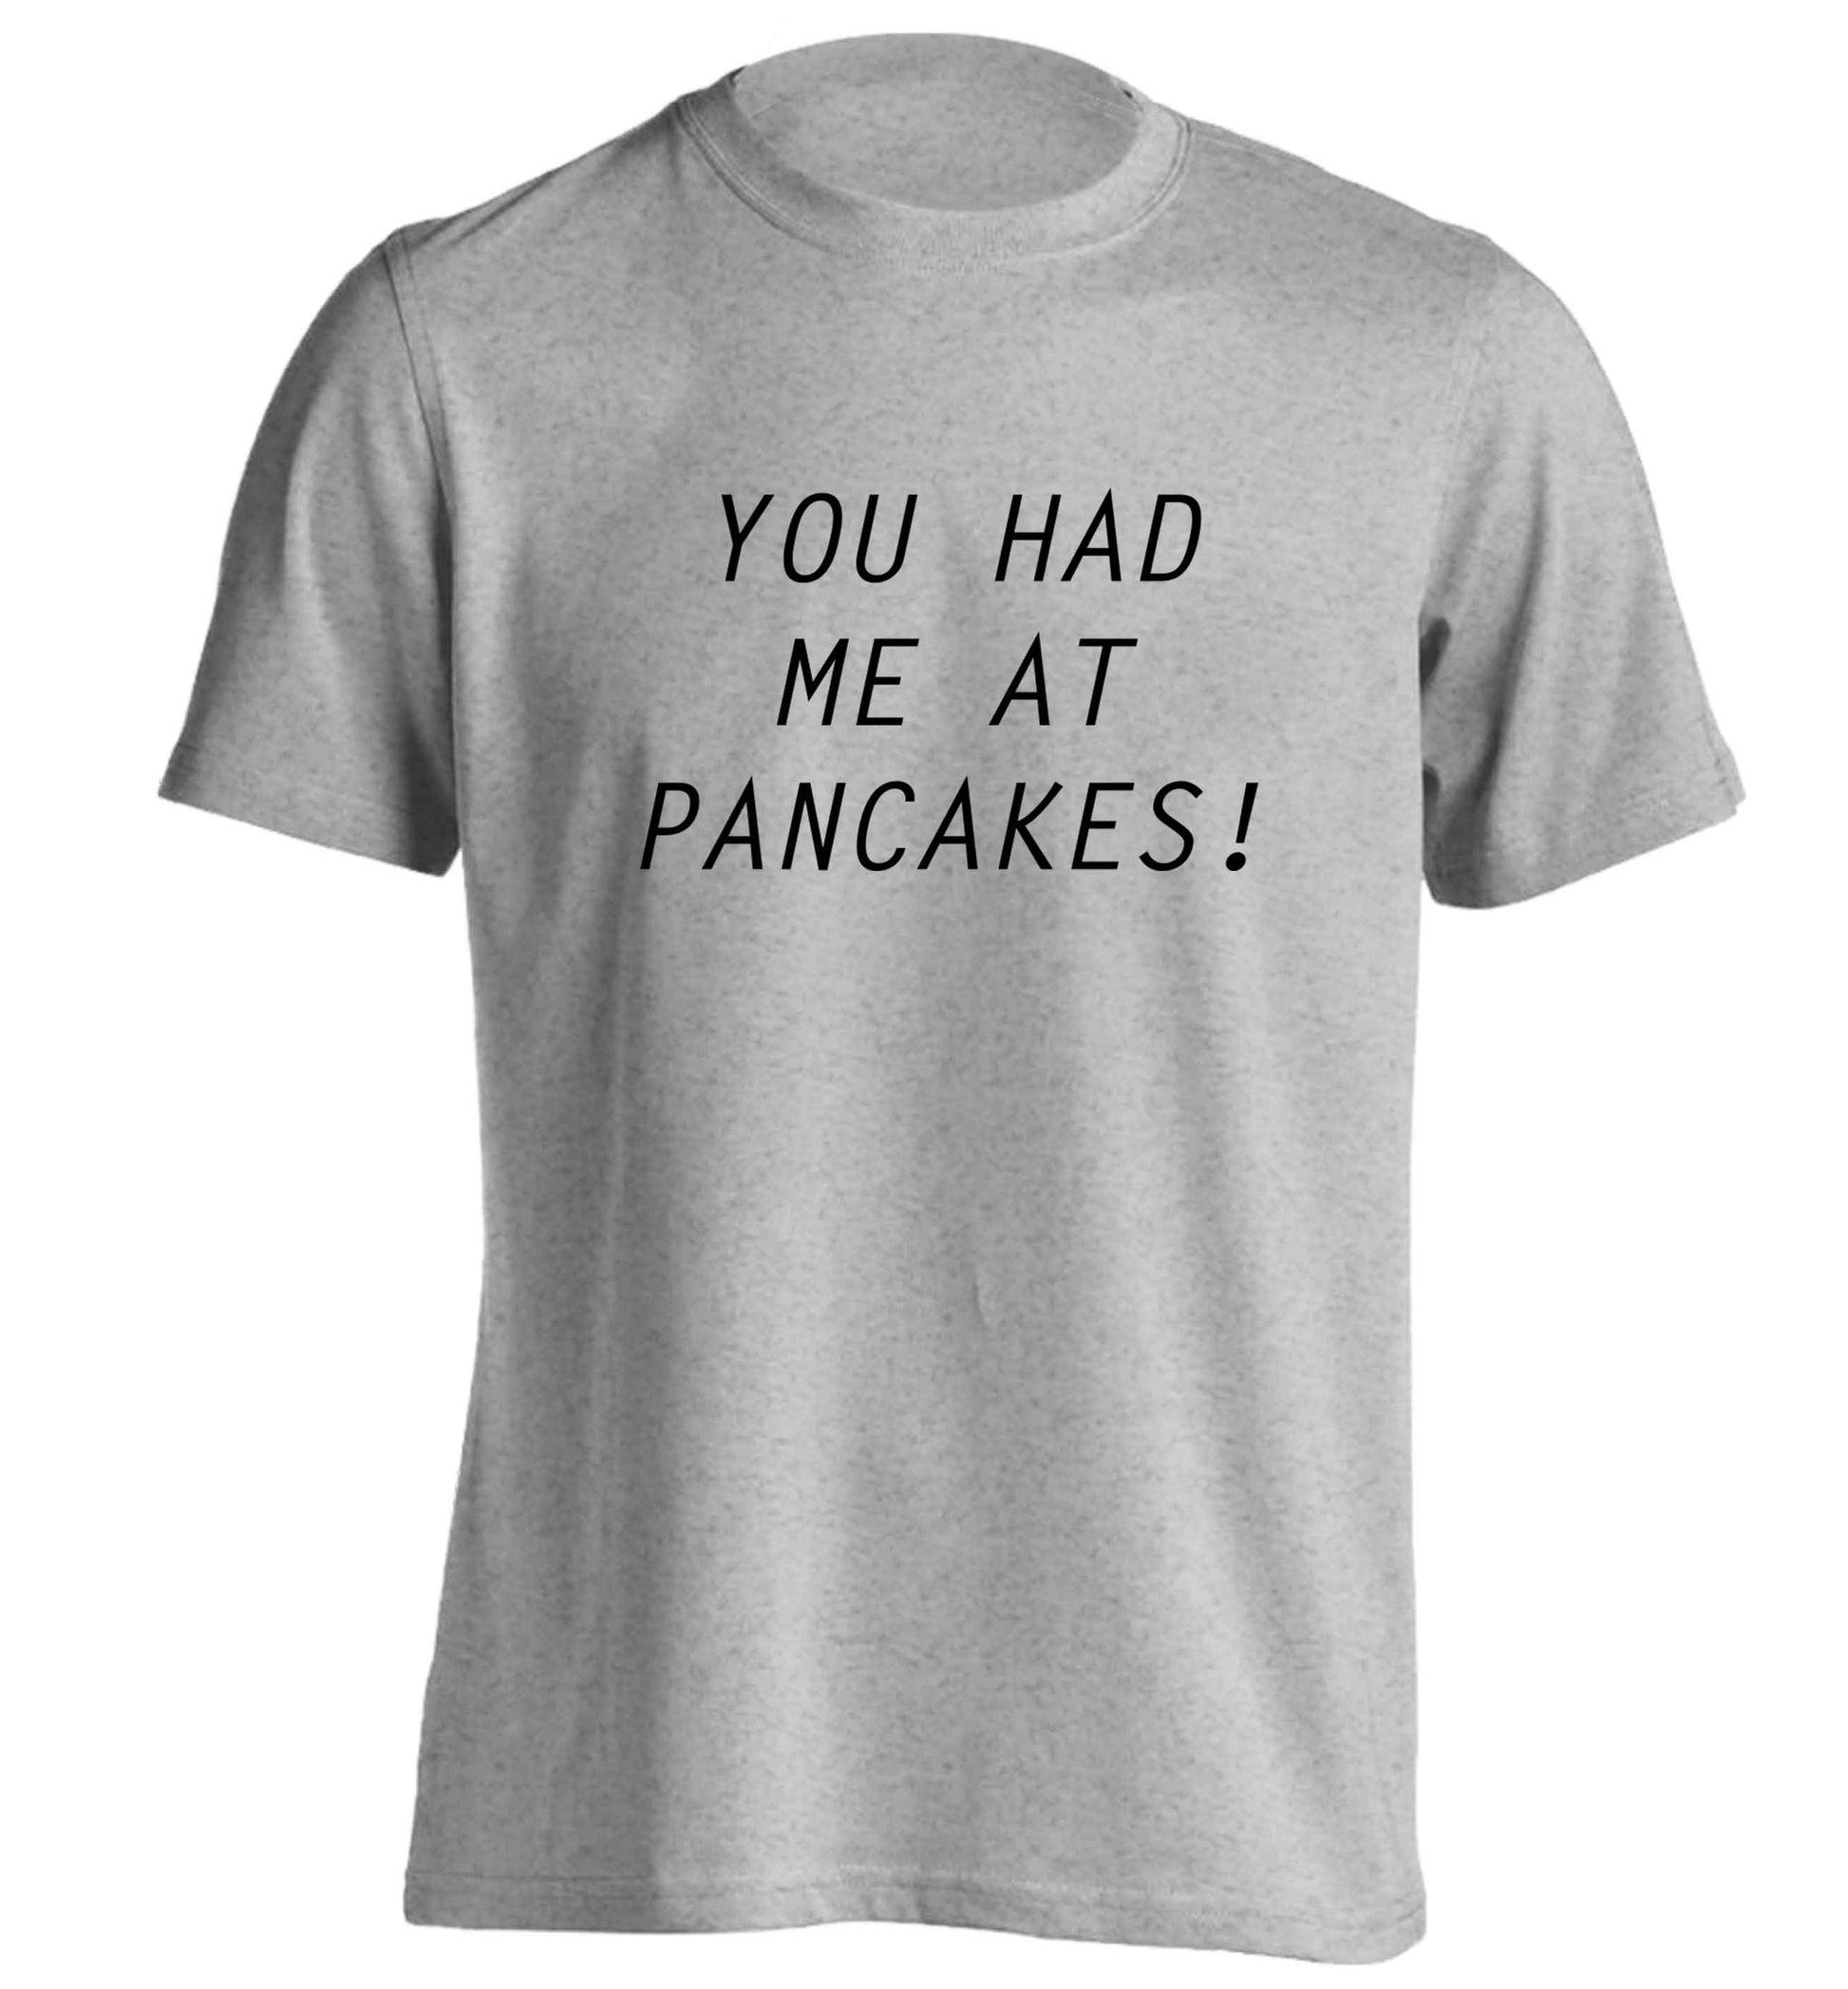 You had me at pancakes adults unisex grey Tshirt 2XL